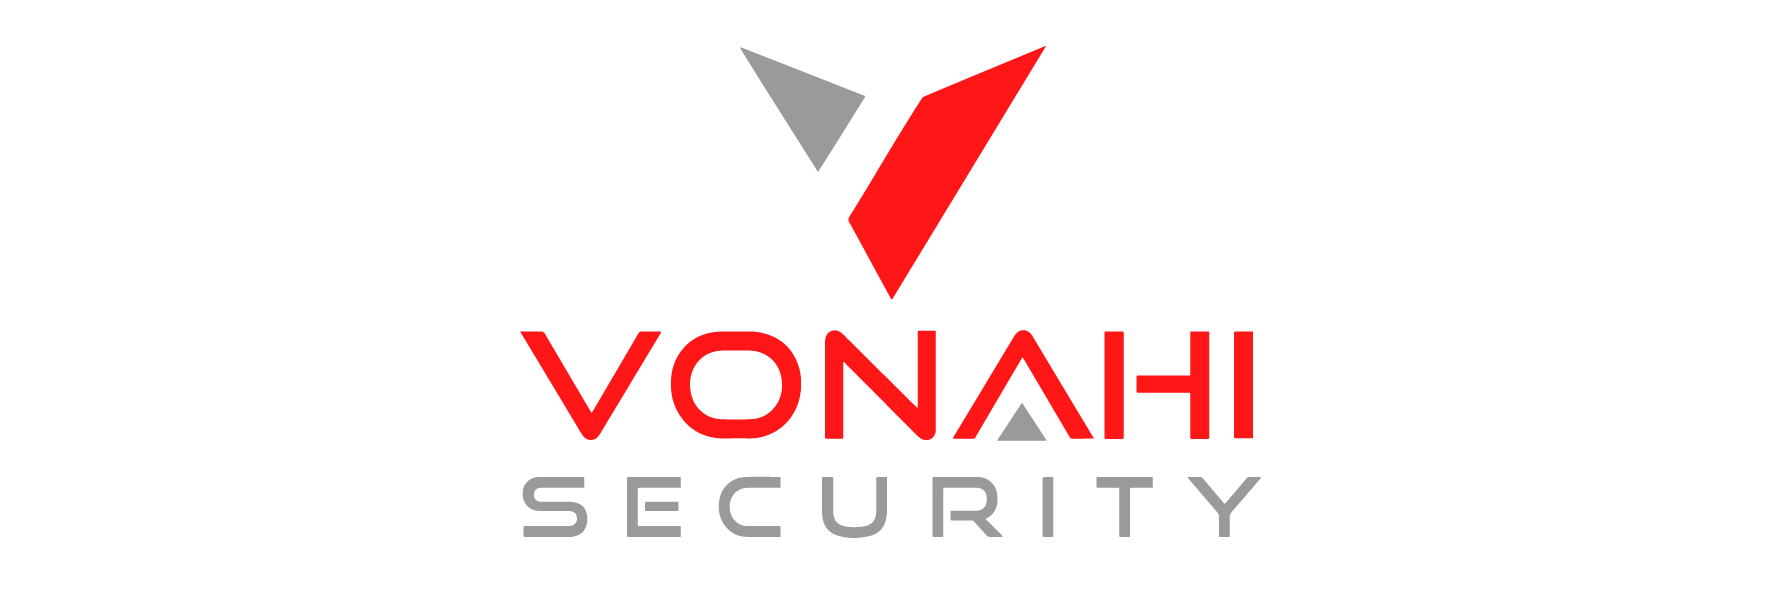 Vonahi-Security-logo-01